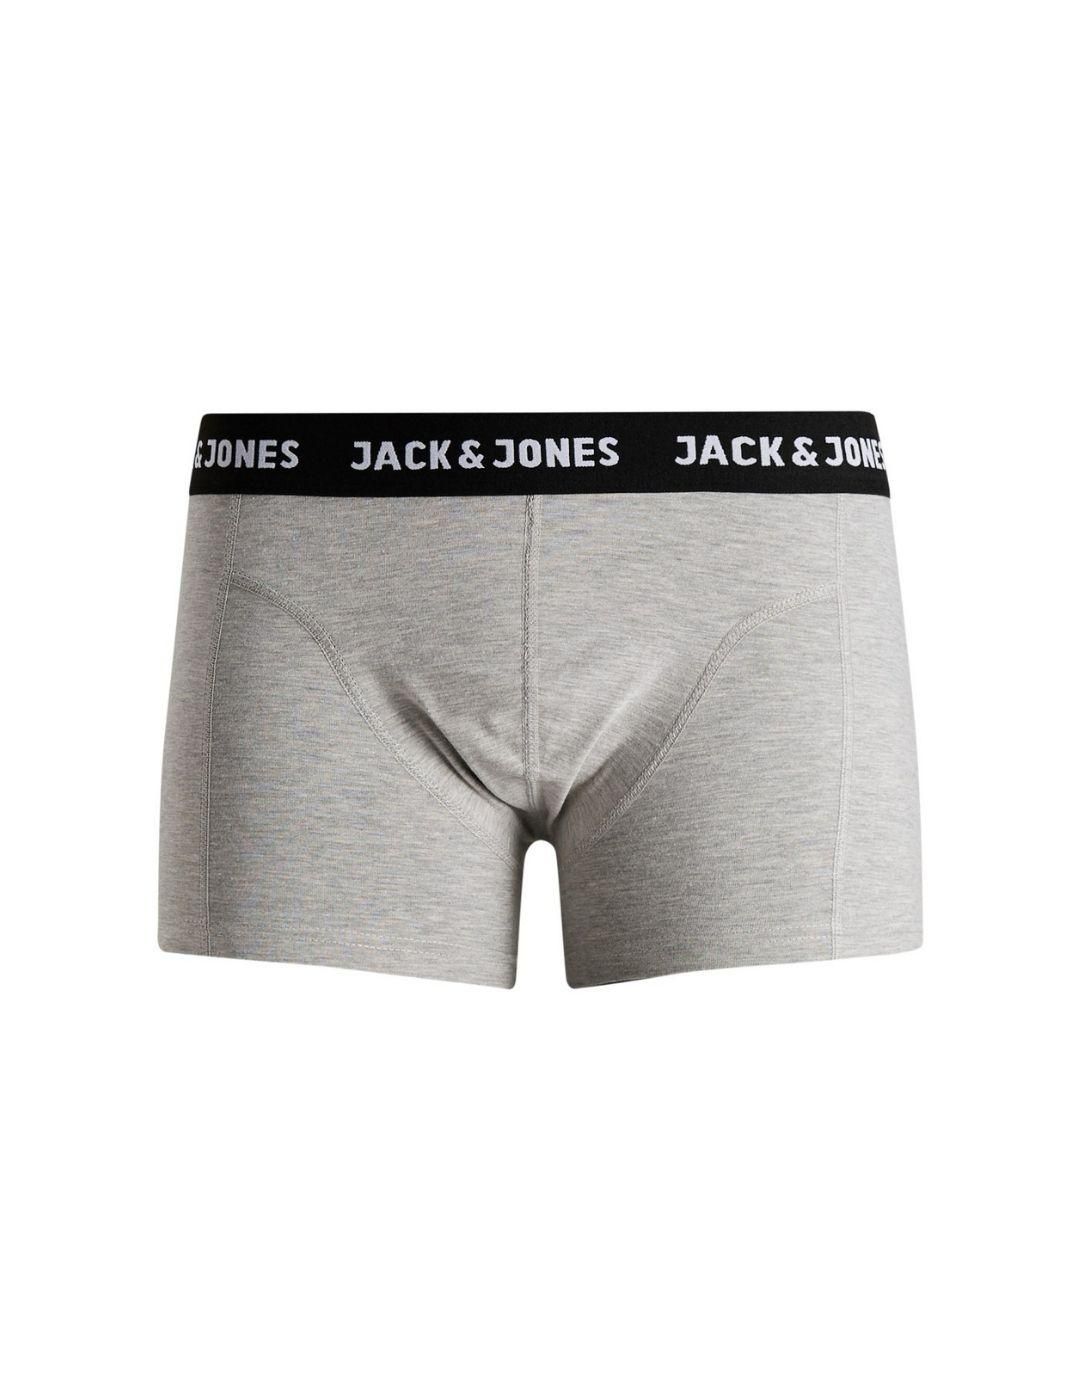 Boxer Jack and Jones Jacanthony Pack 3 - Bicos de Fío